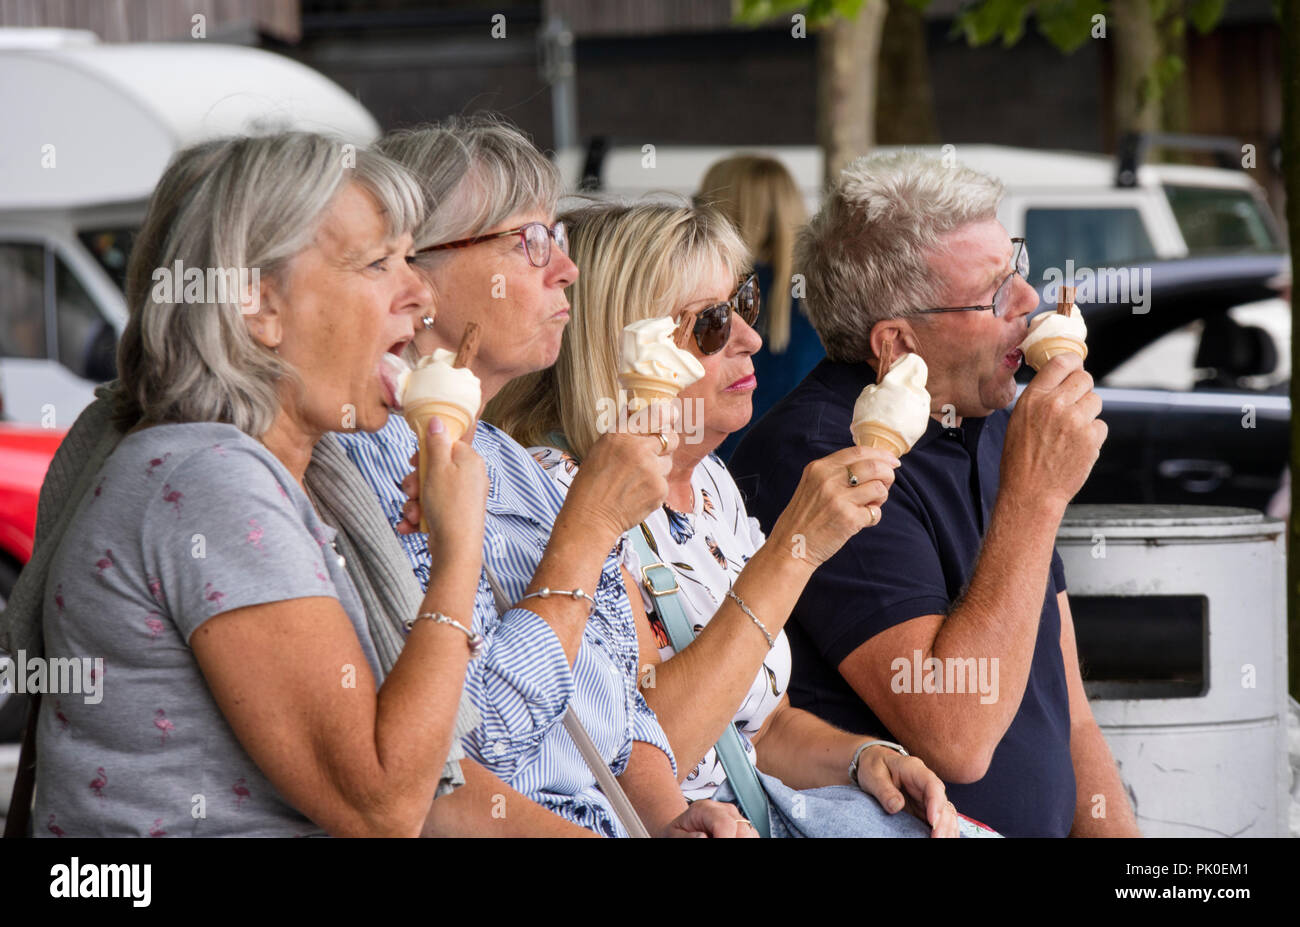 Middle aged couples eating ice creams, England, UK Stock Photo